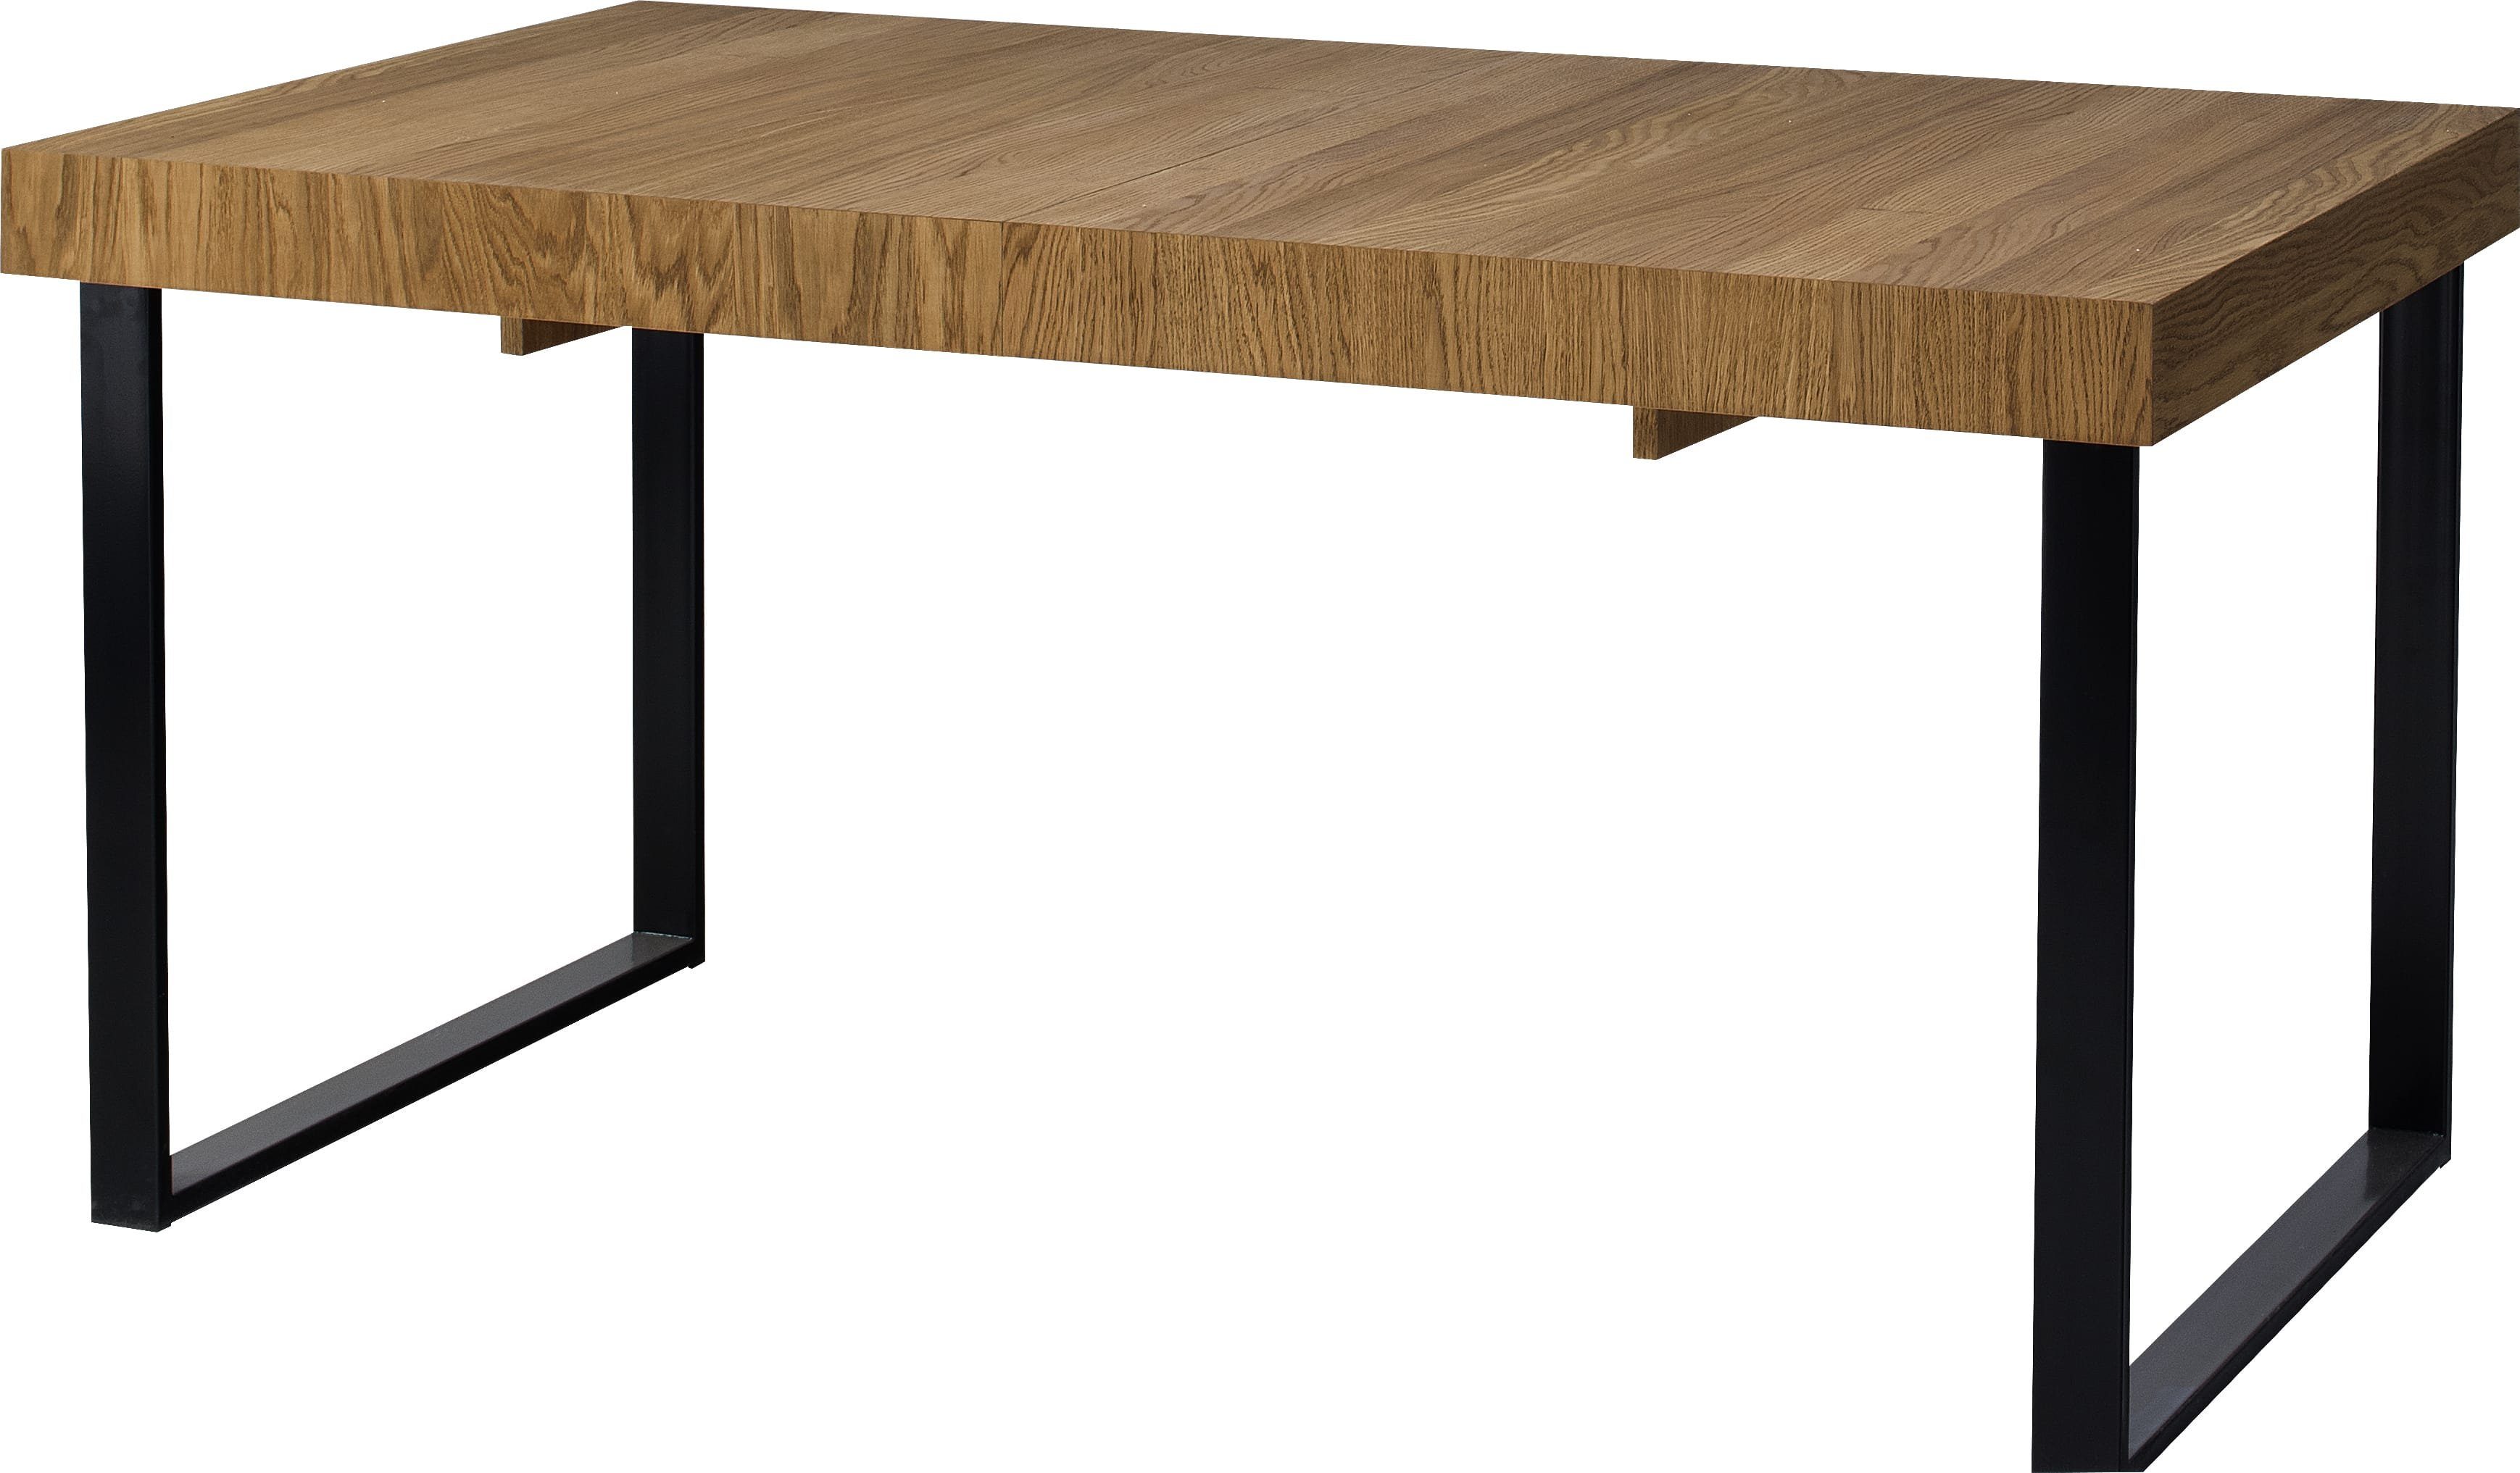 Stylefy Esstisch Marakesh Massivholz Honig Eiche Schwarz Matt (Esstisch, Tisch), aus Massivholz, ausziehbar, rechteckig, Skandinavisch Design, Metall